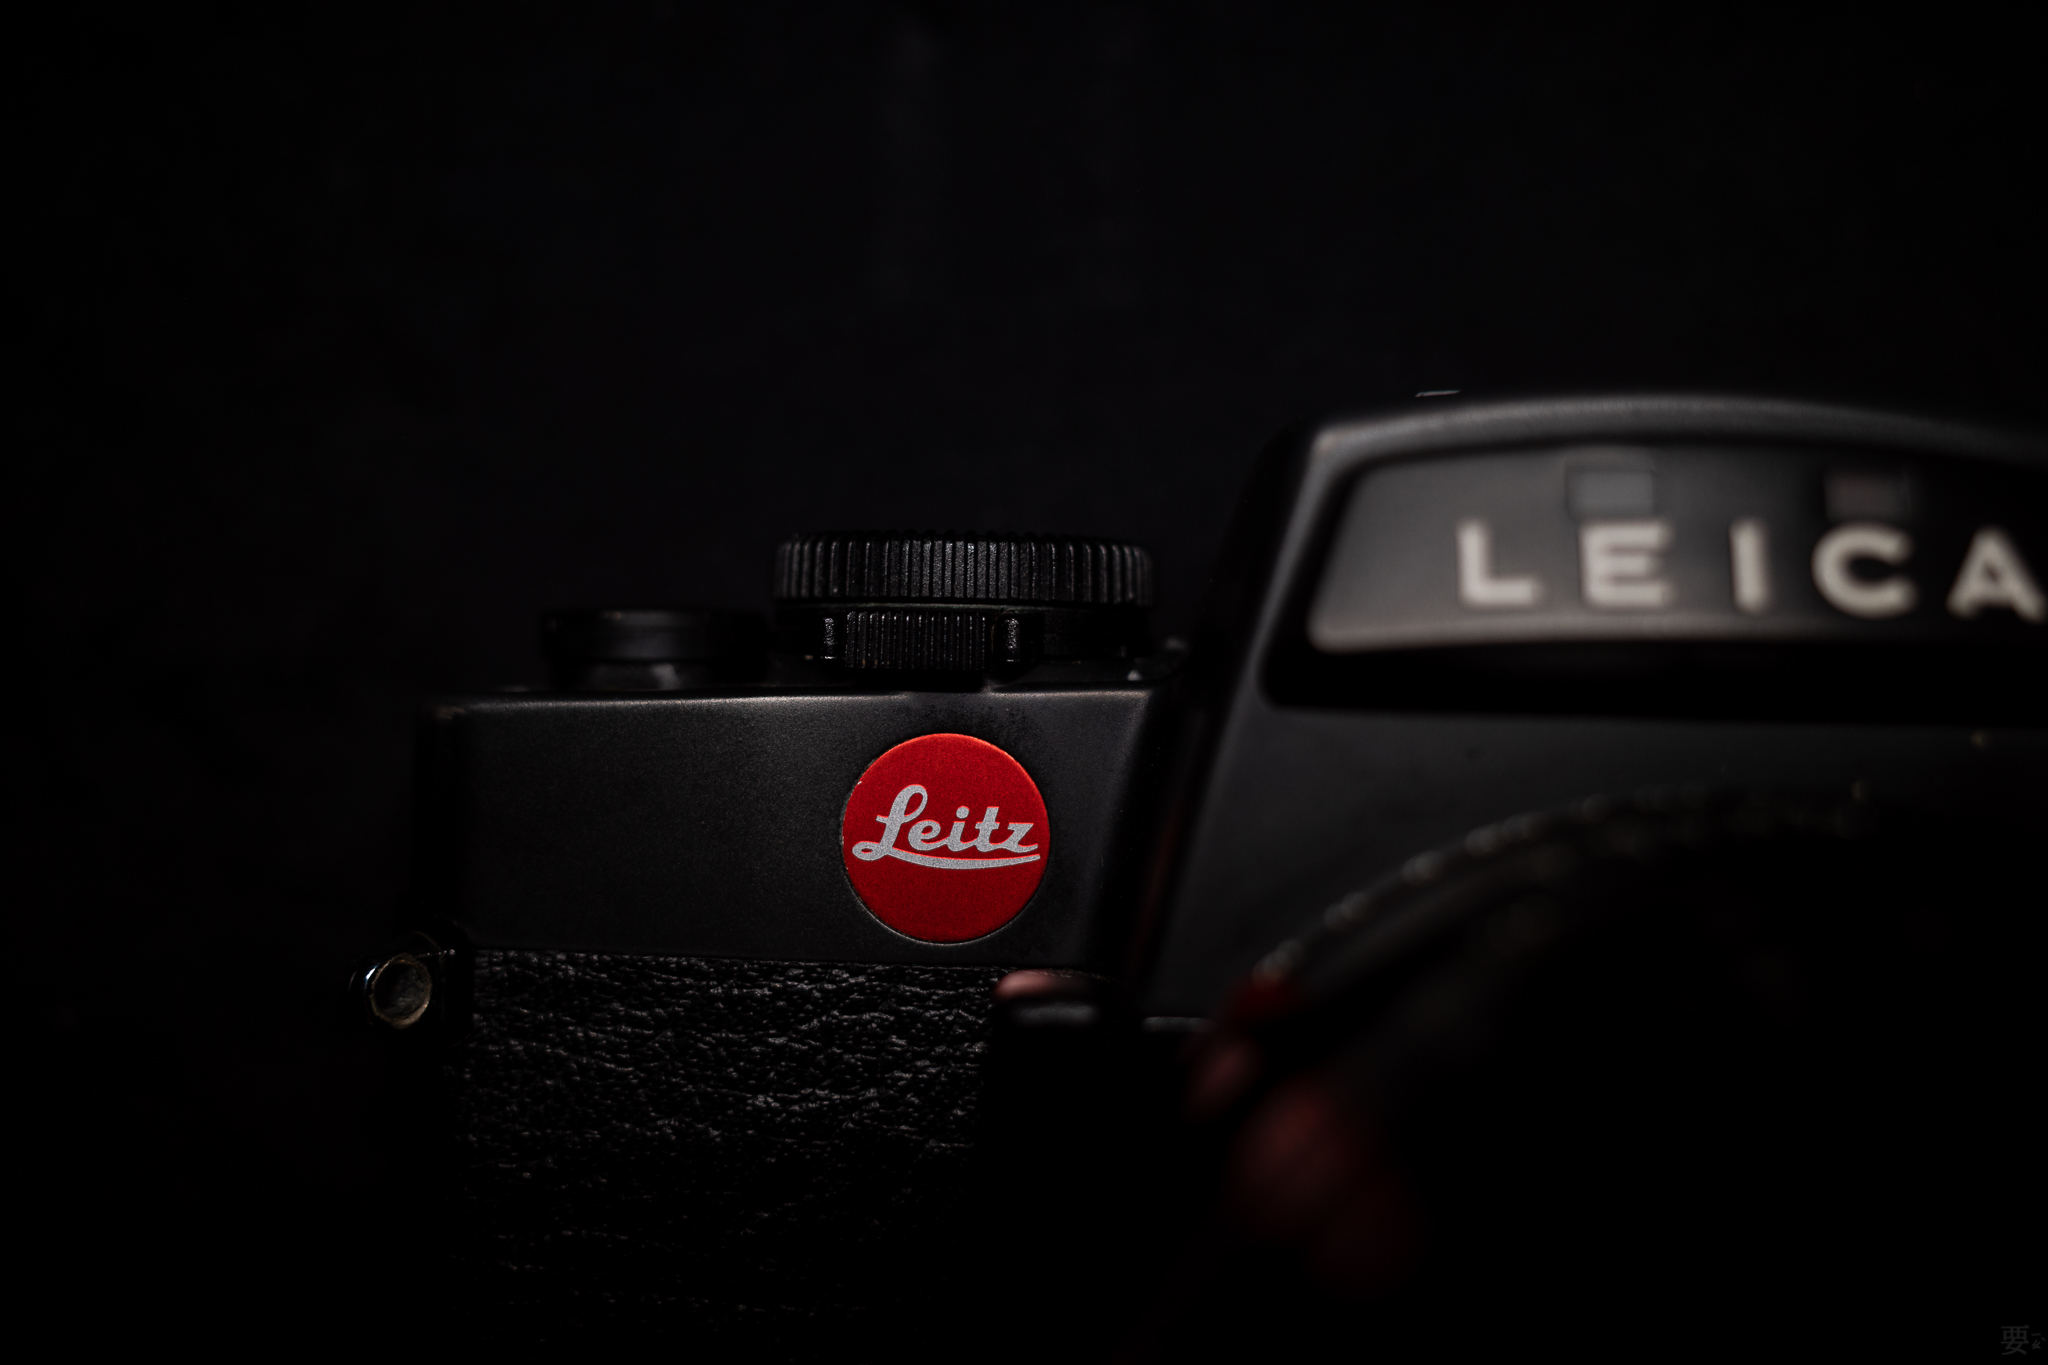 Leica R4手动胶片单反相机